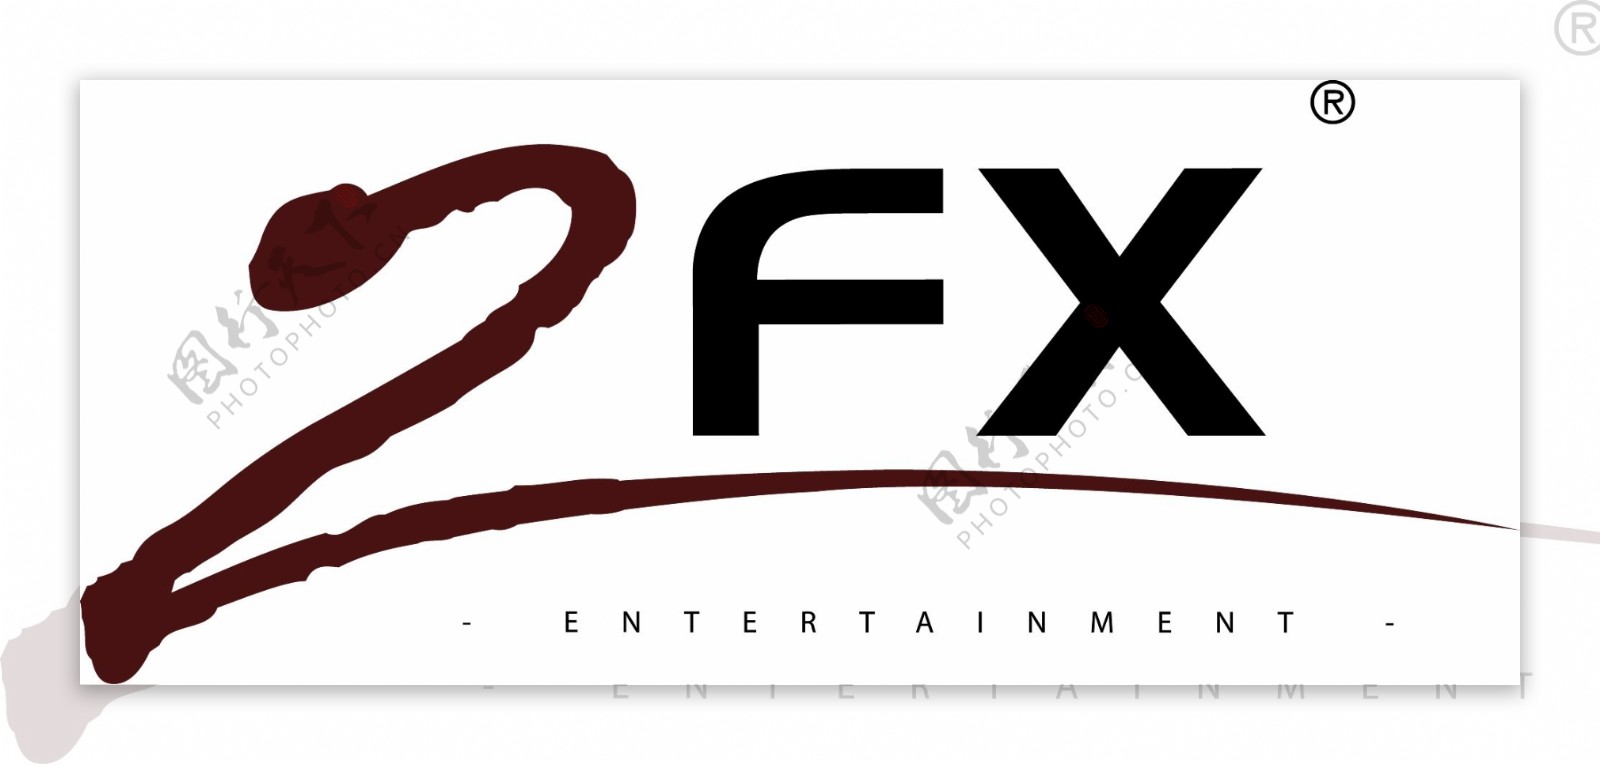 2fx娱乐公司